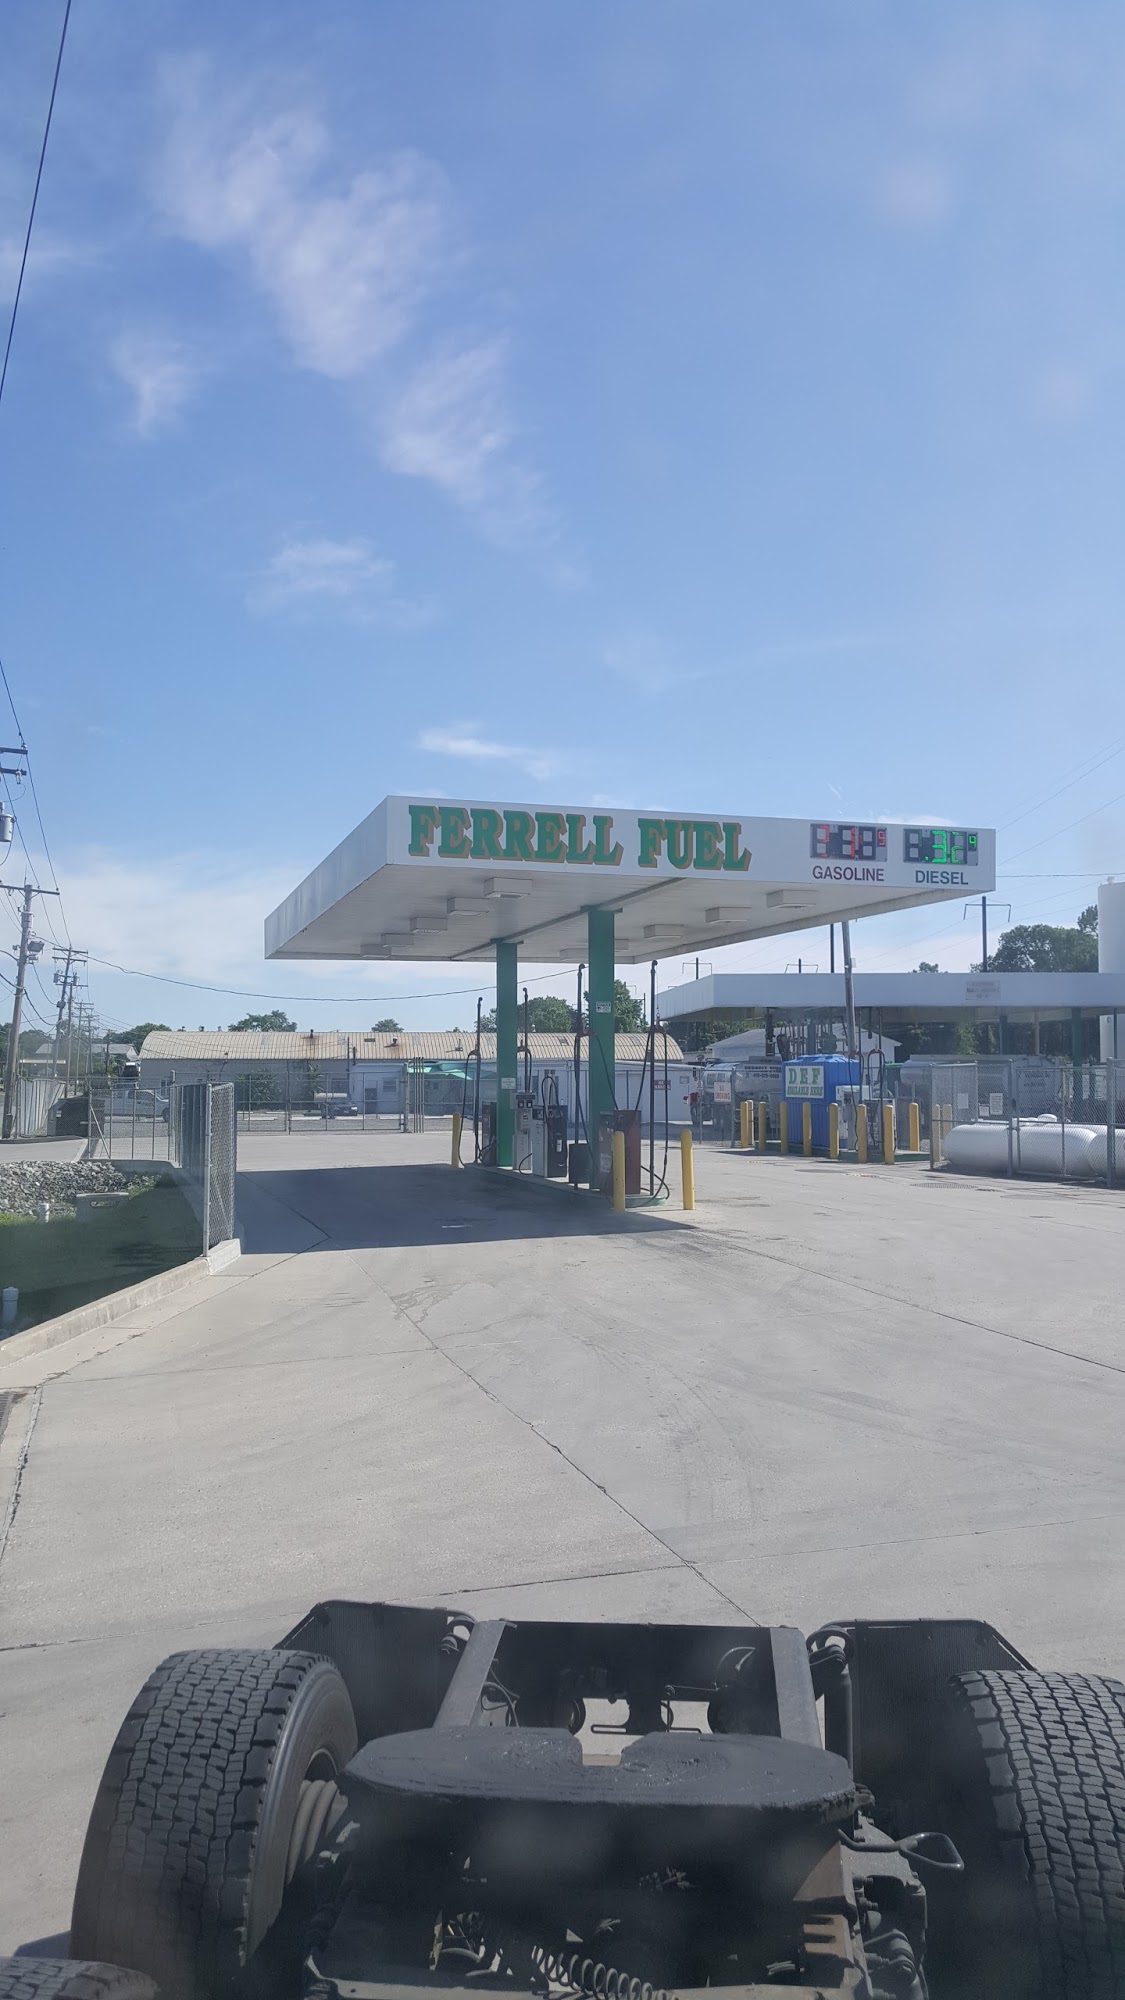 Ferrell Fuel Co. Inc.